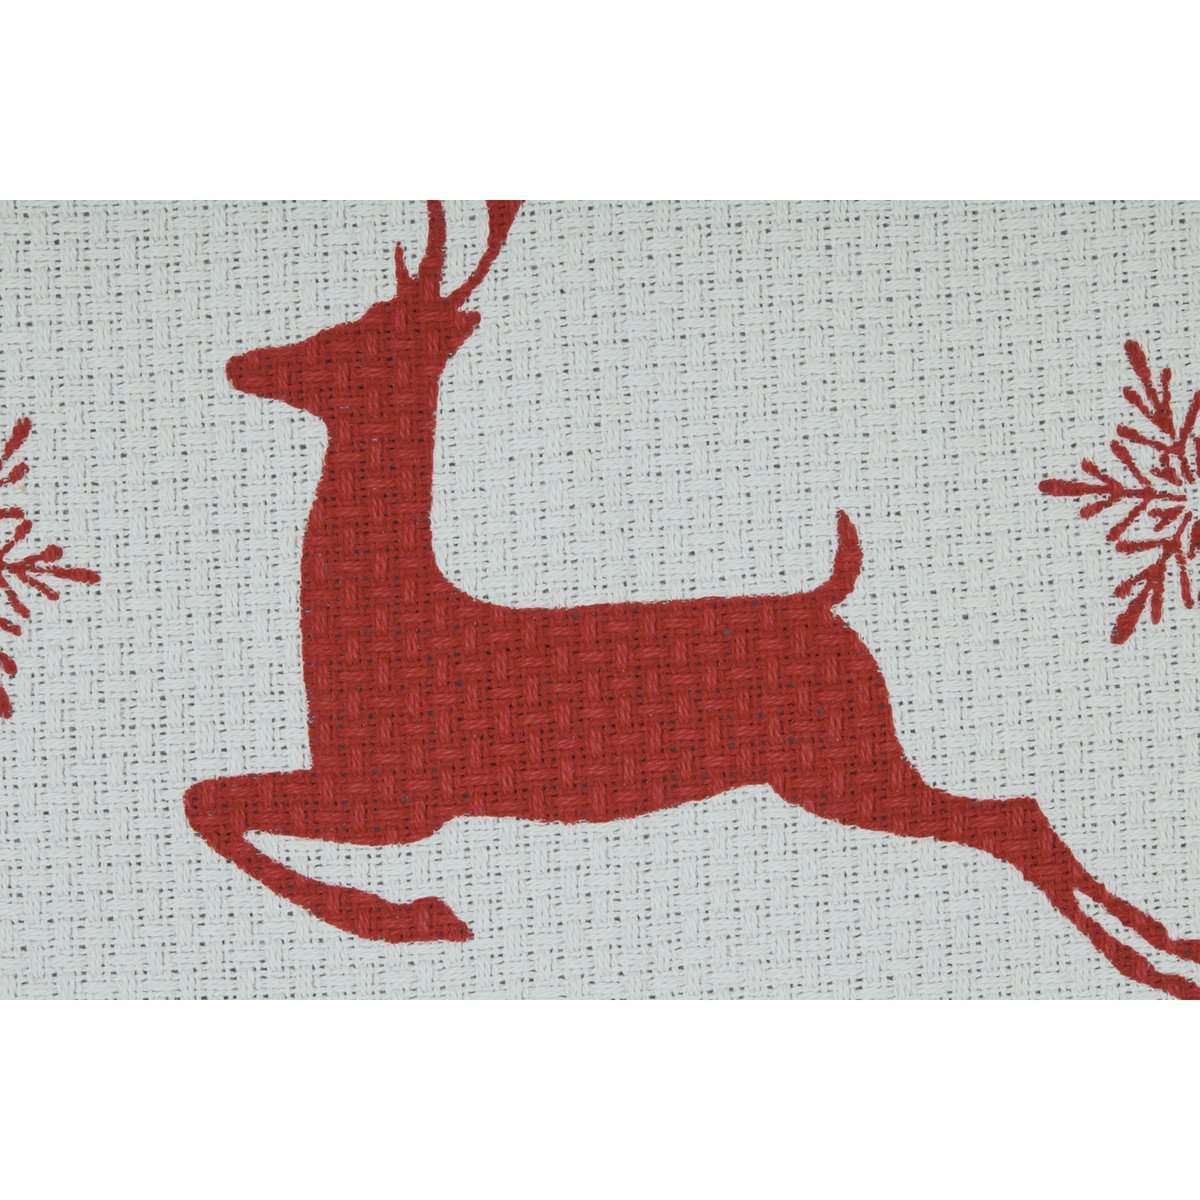 Reindeer Dash Woven Throw 60" x 50" Grey, Red VHC Brands - The Fox Decor